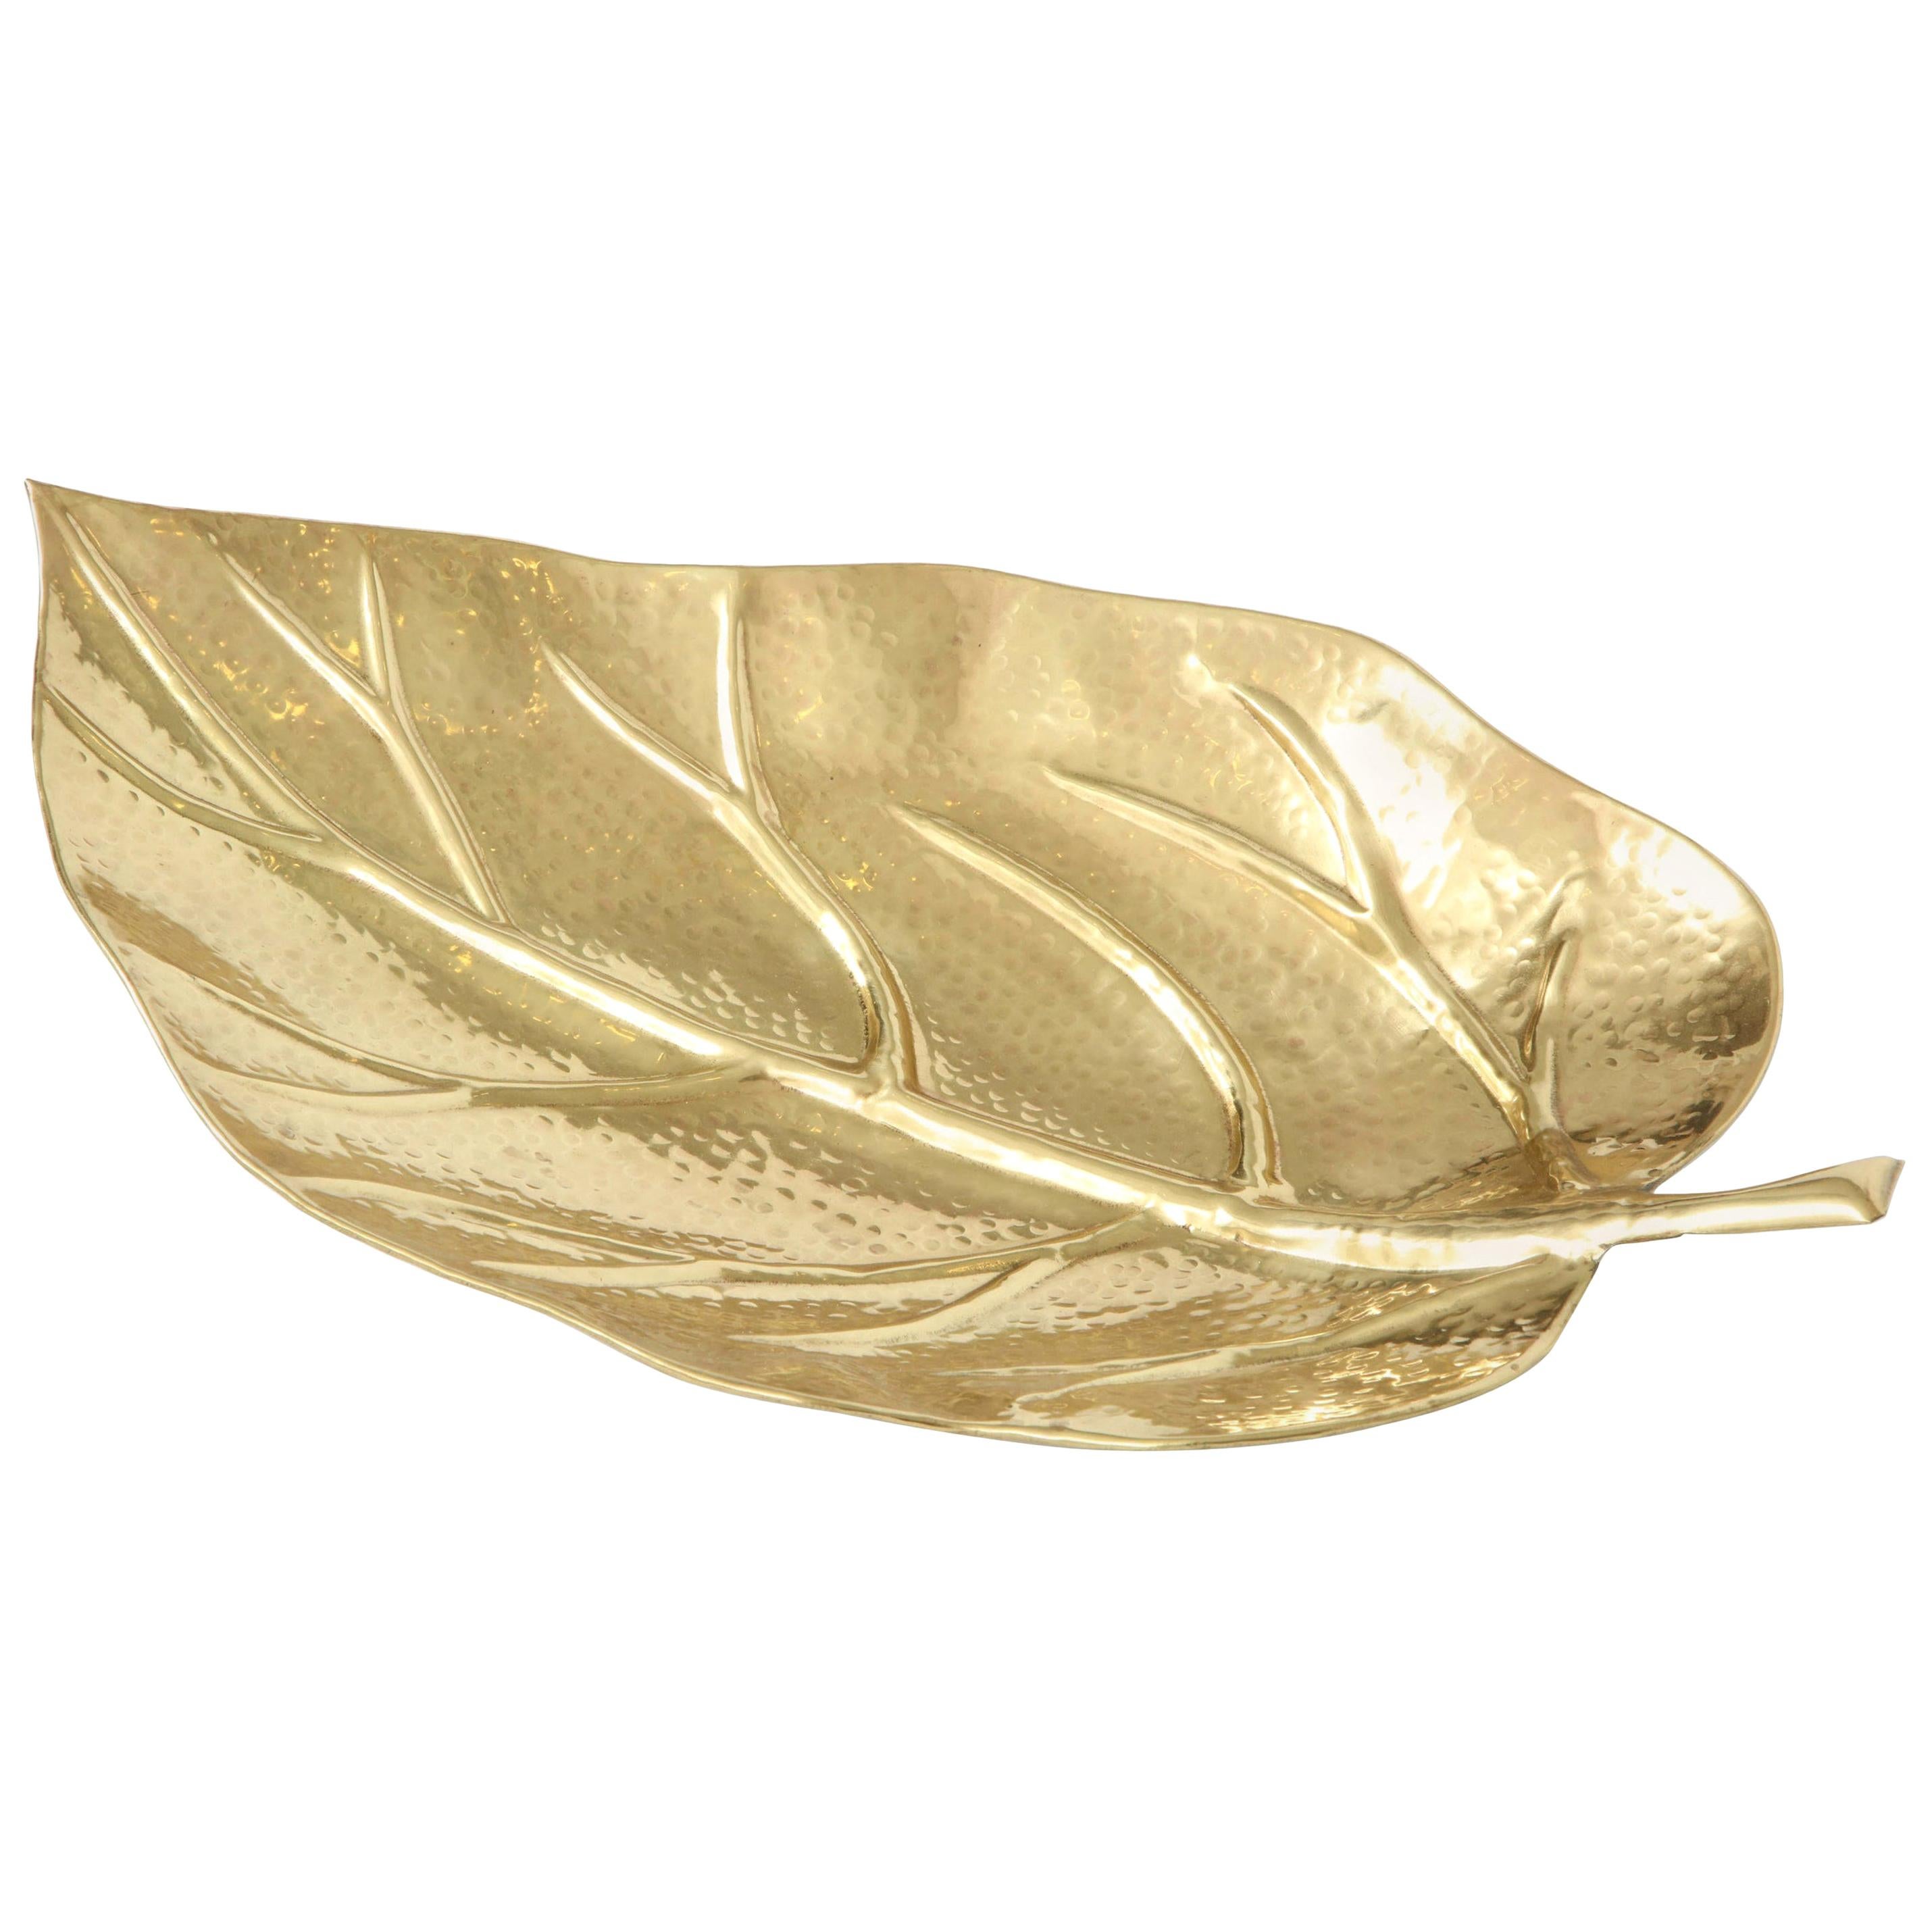 Bowl, Leaf Shape, Midcentury Italian, Brass, circa 1950, Polished Brass